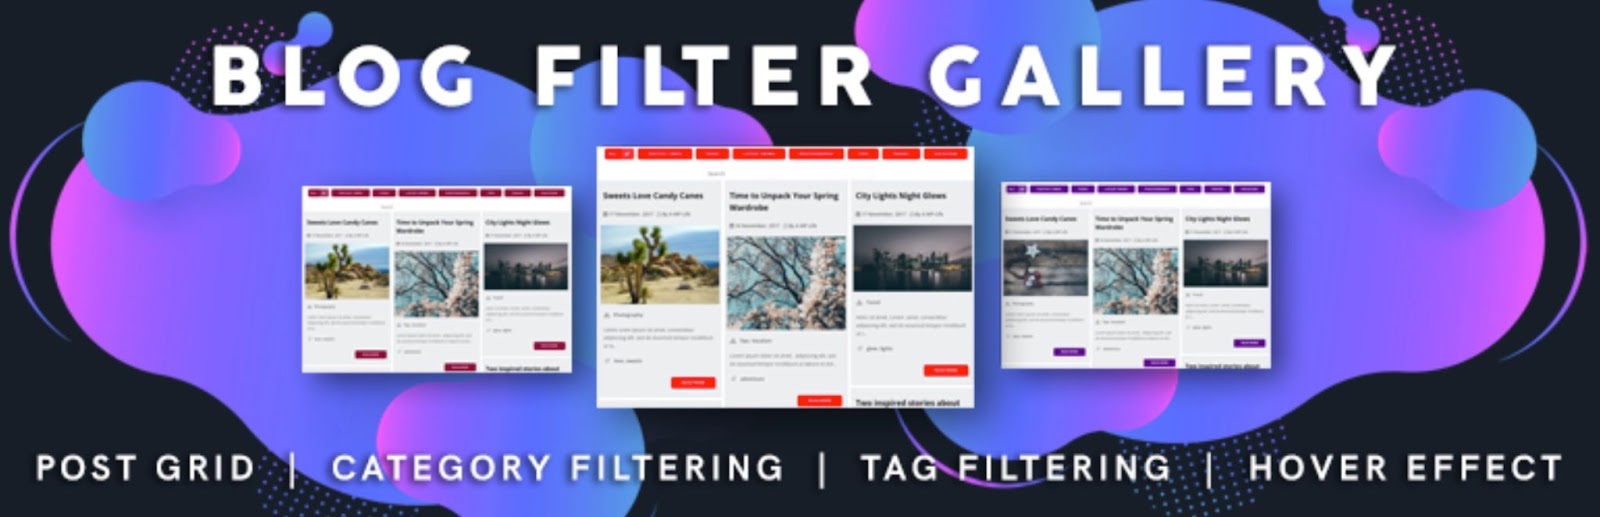 WordPress filter plugin, example from Blog Filter